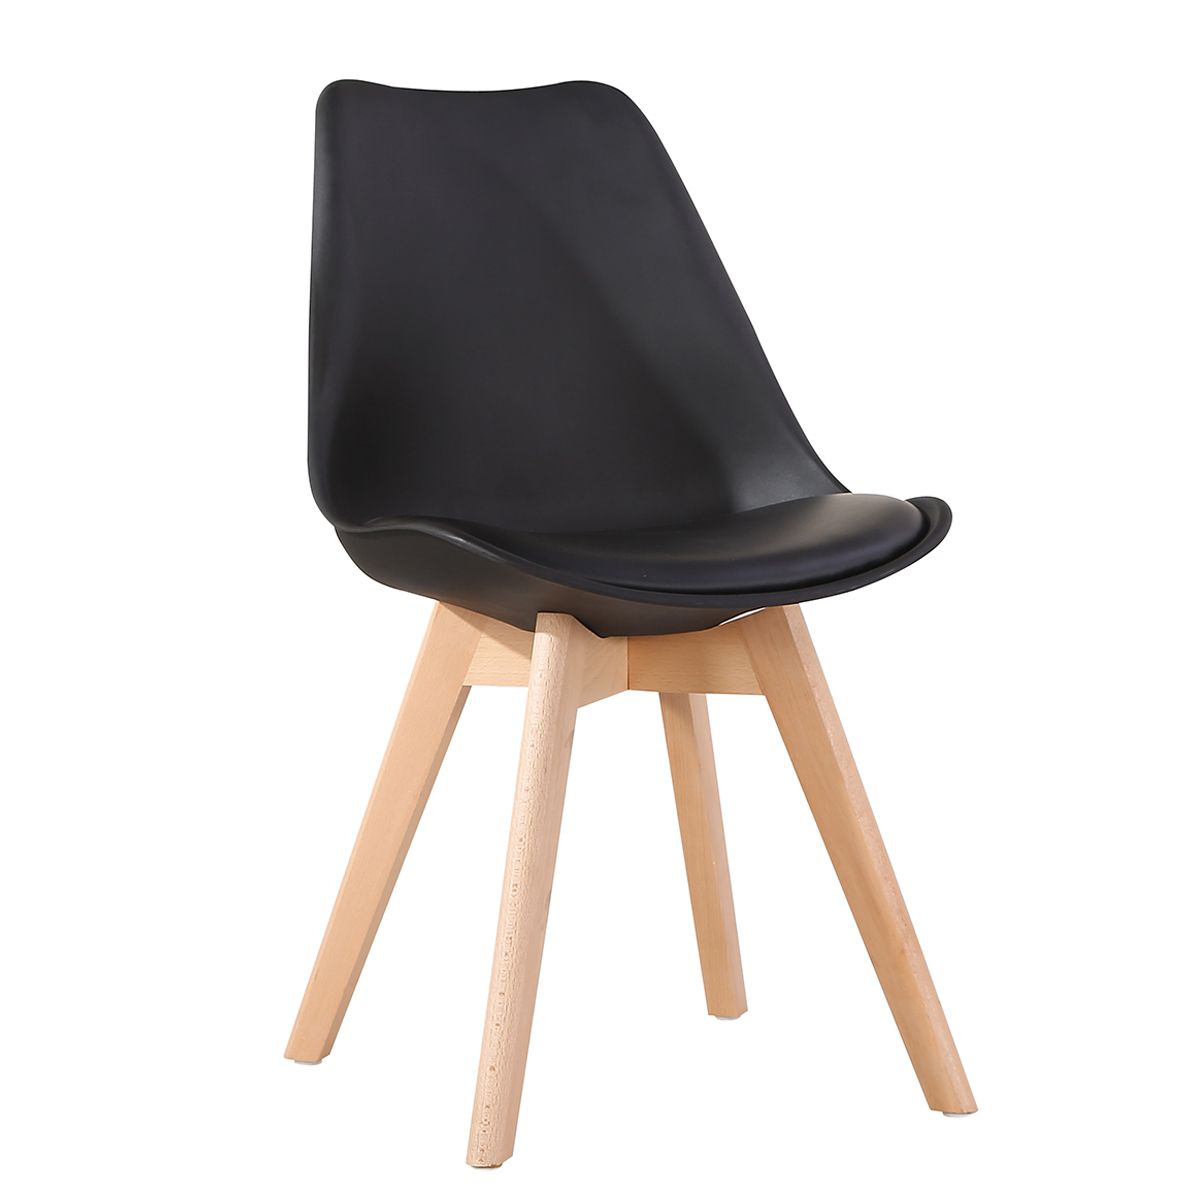 Chair GROUGH Black PP / PU / Wood 49x56x83cm